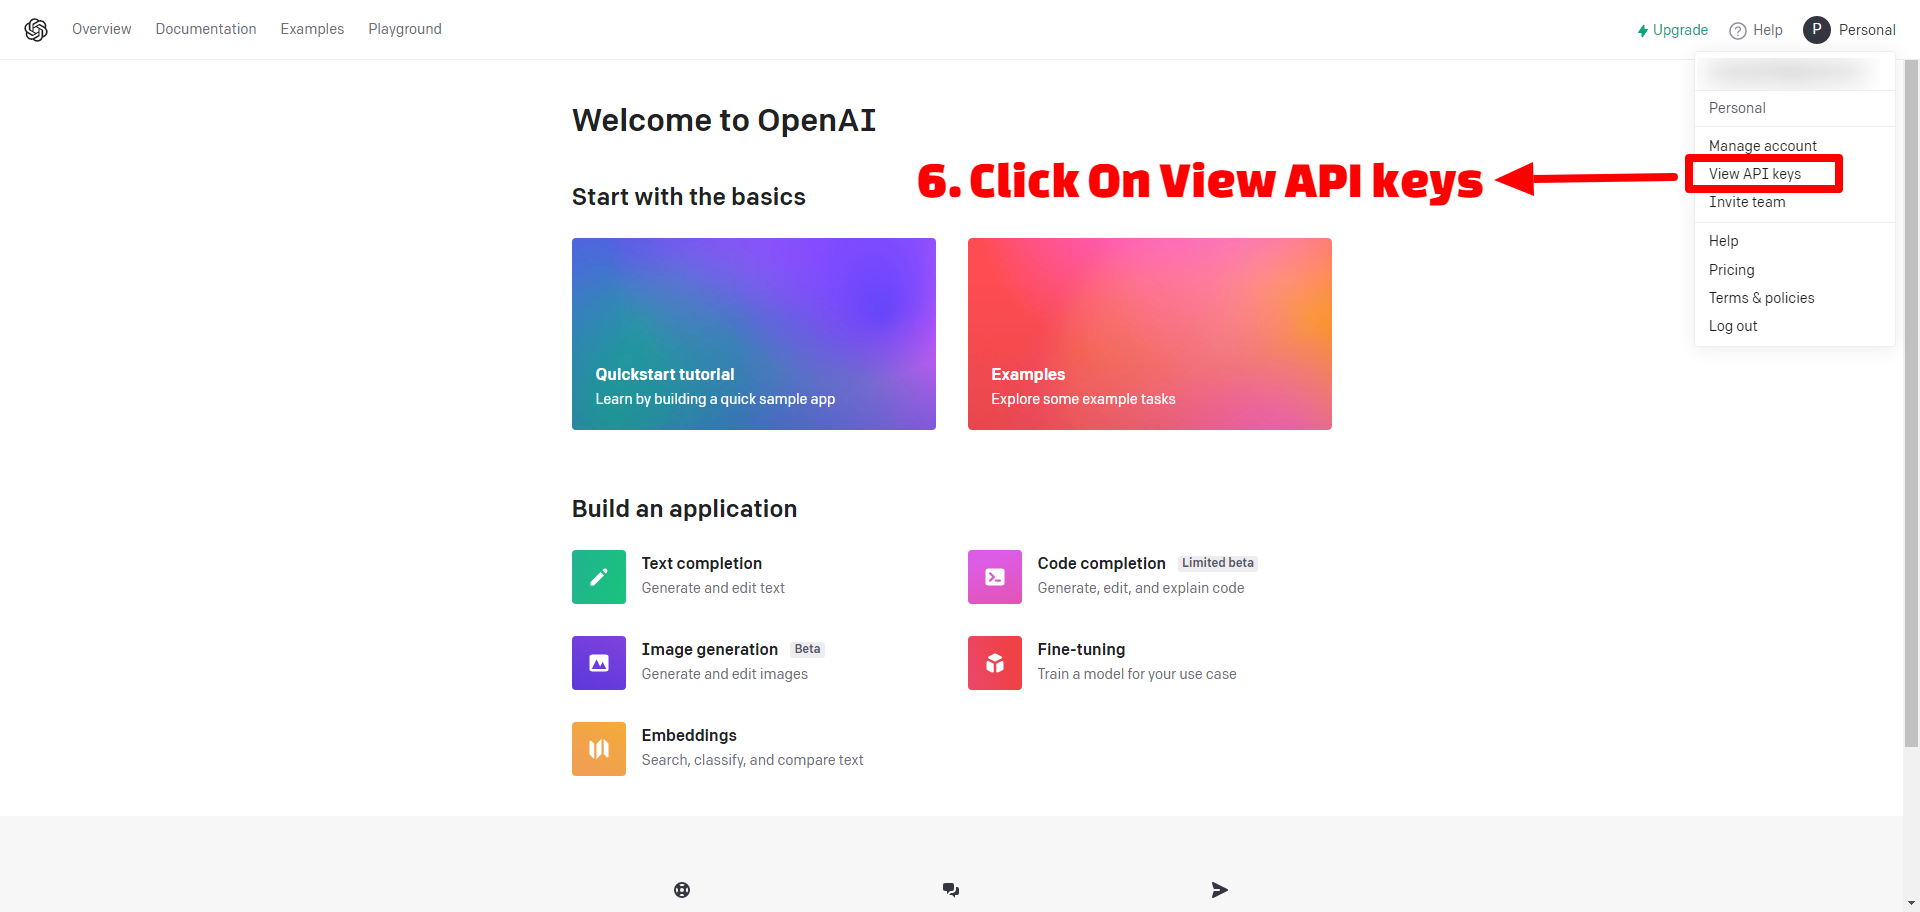 Click on View API keys